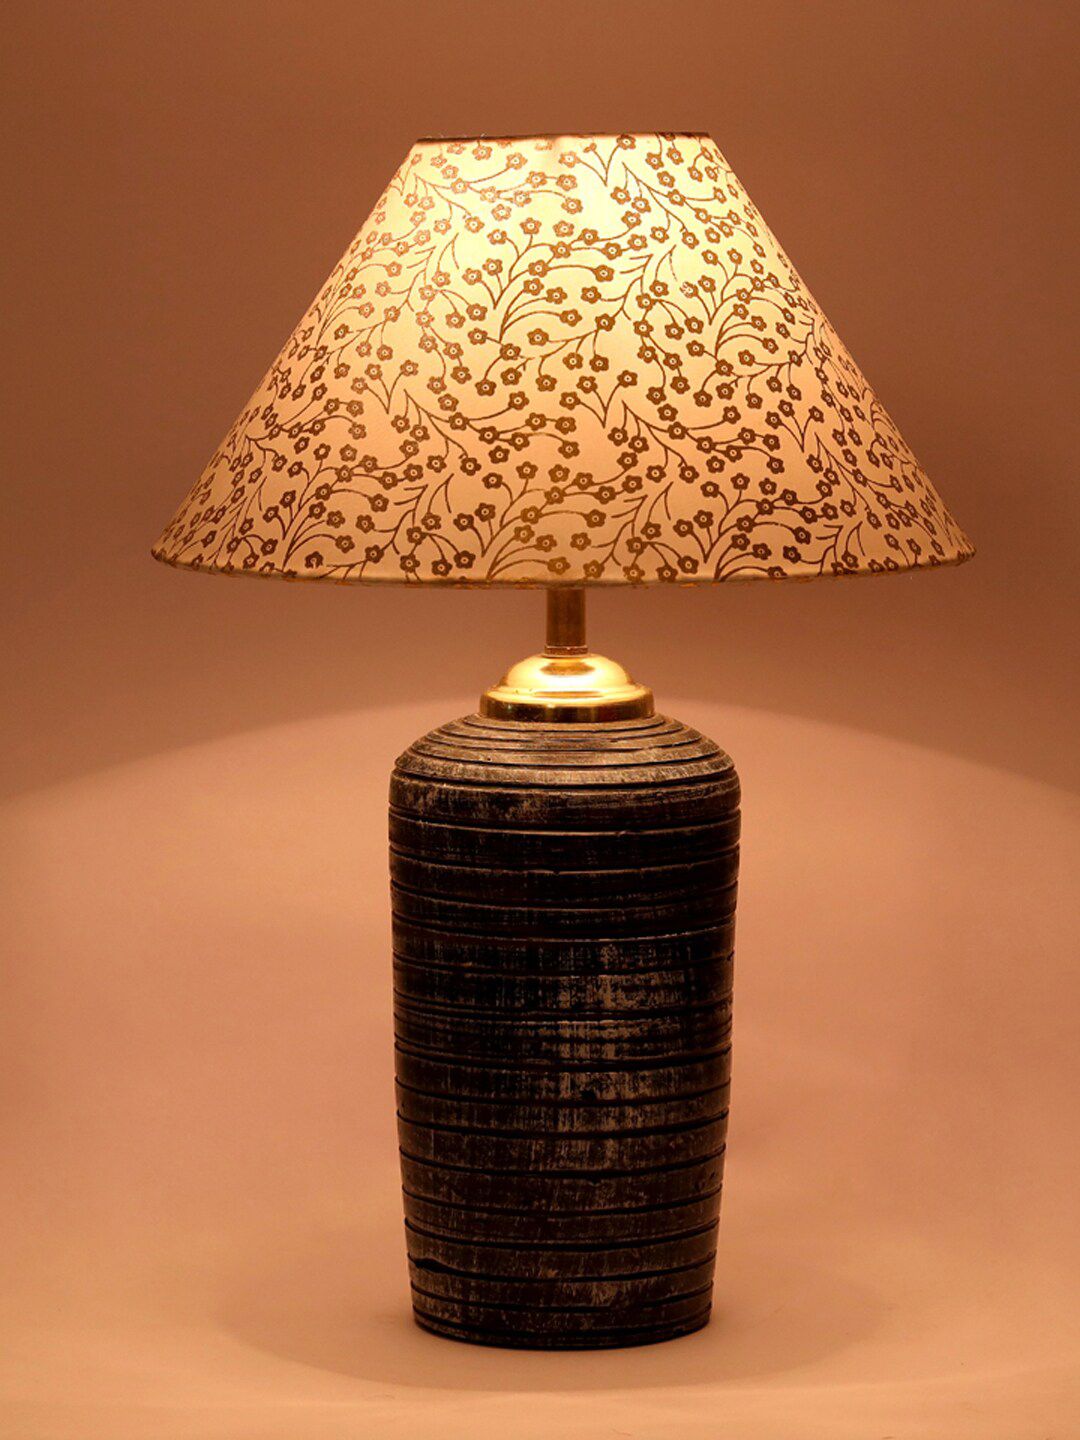 Foziq Grey & White Printed Table Lamp Price in India